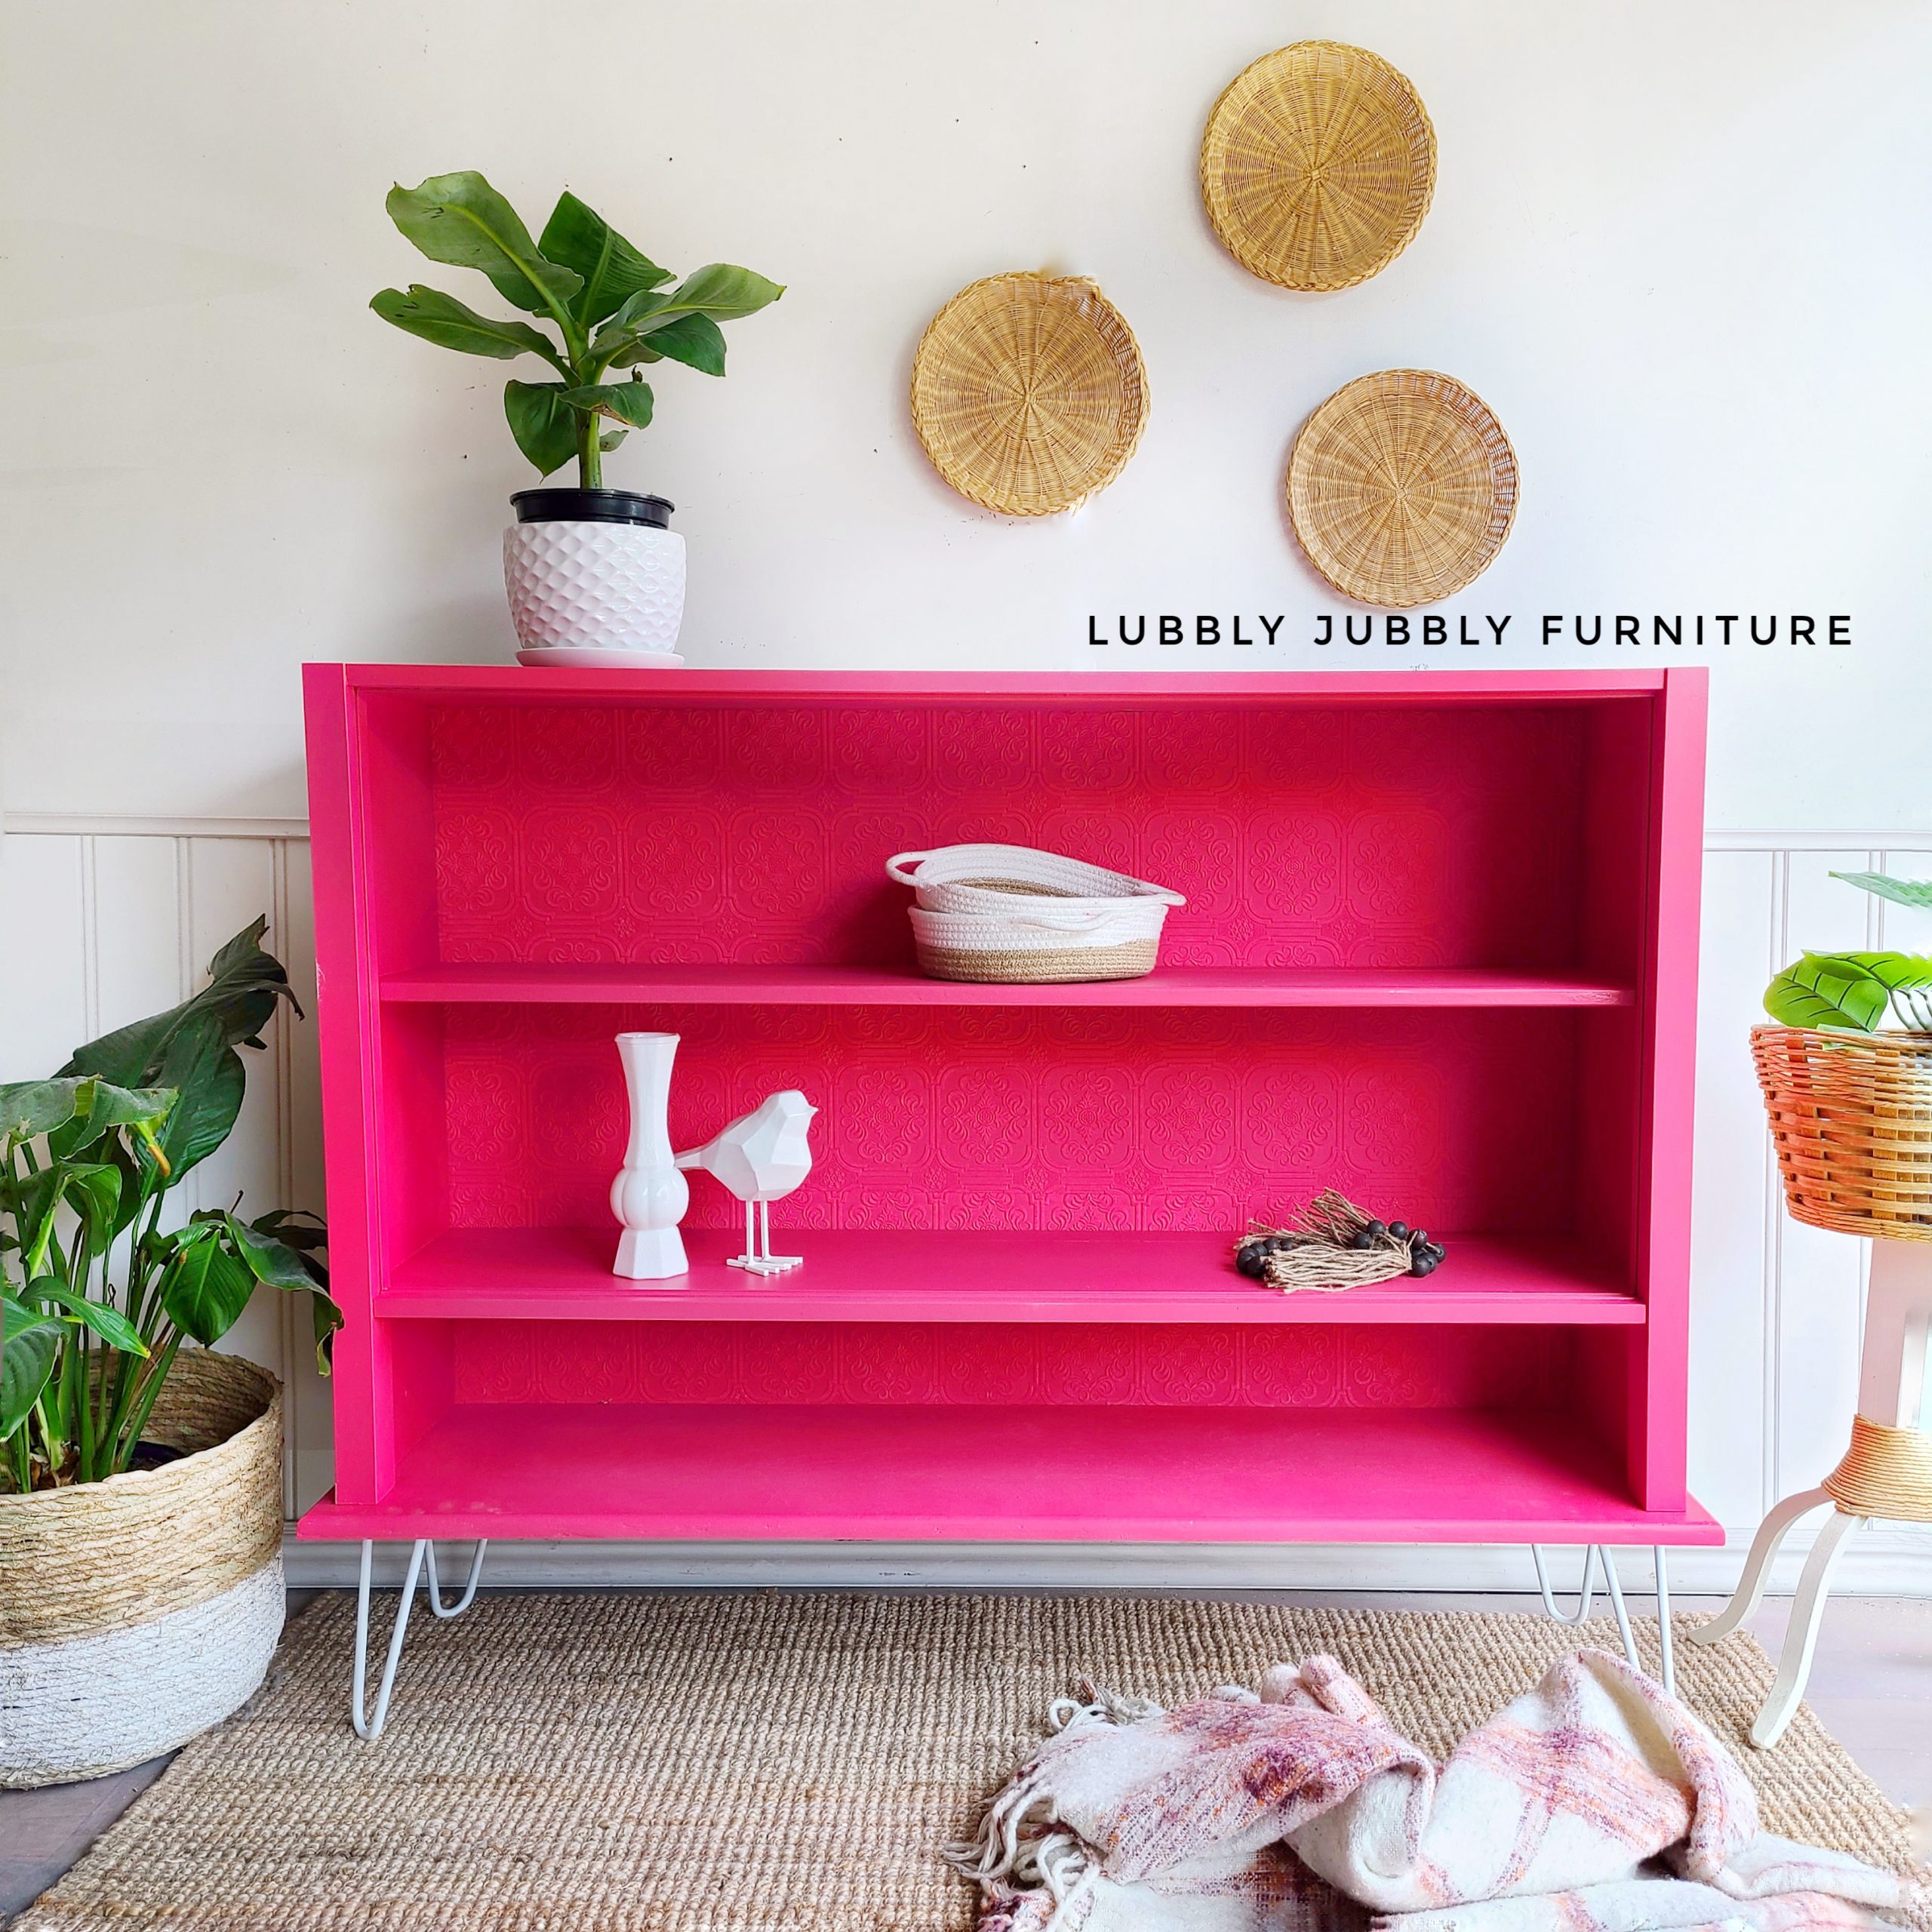 Deep Pink bookshelf on hairpin legs with white geometric design, white pot, ceramic bird, books, potted plants, wicker wall art